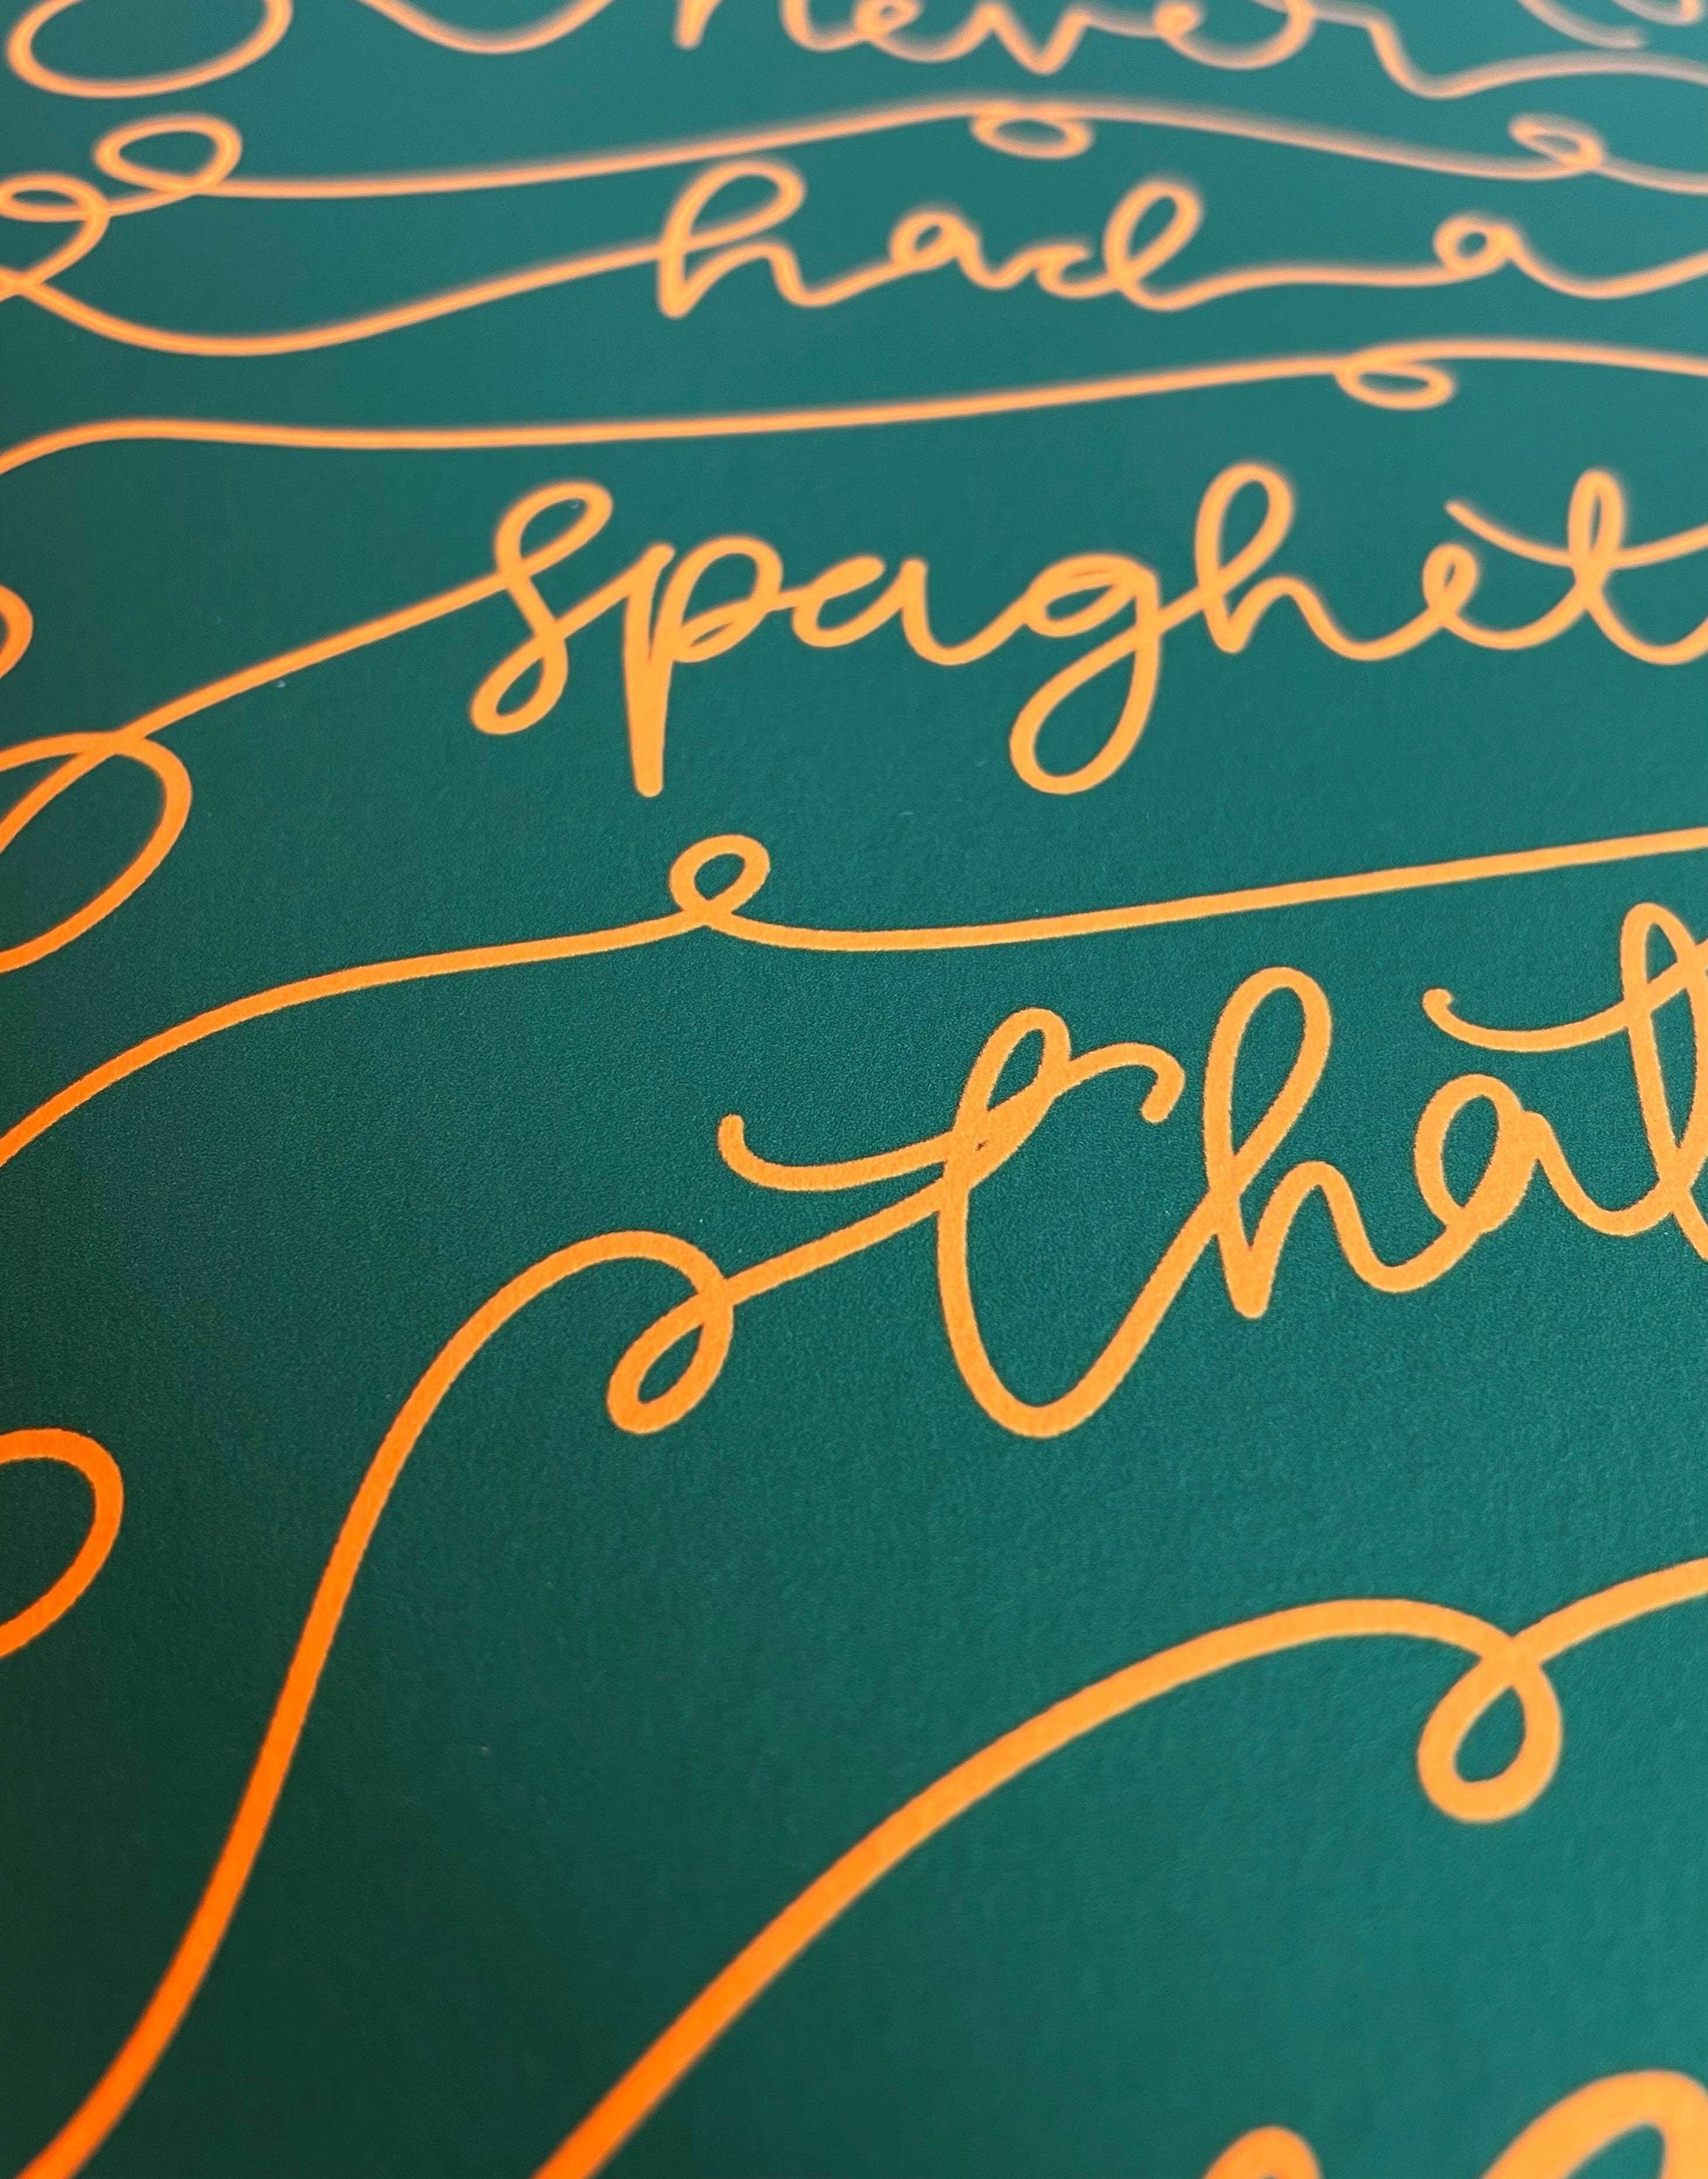 A4 foodie print - Never had a spaghetti I regretti And Hope Designs Print